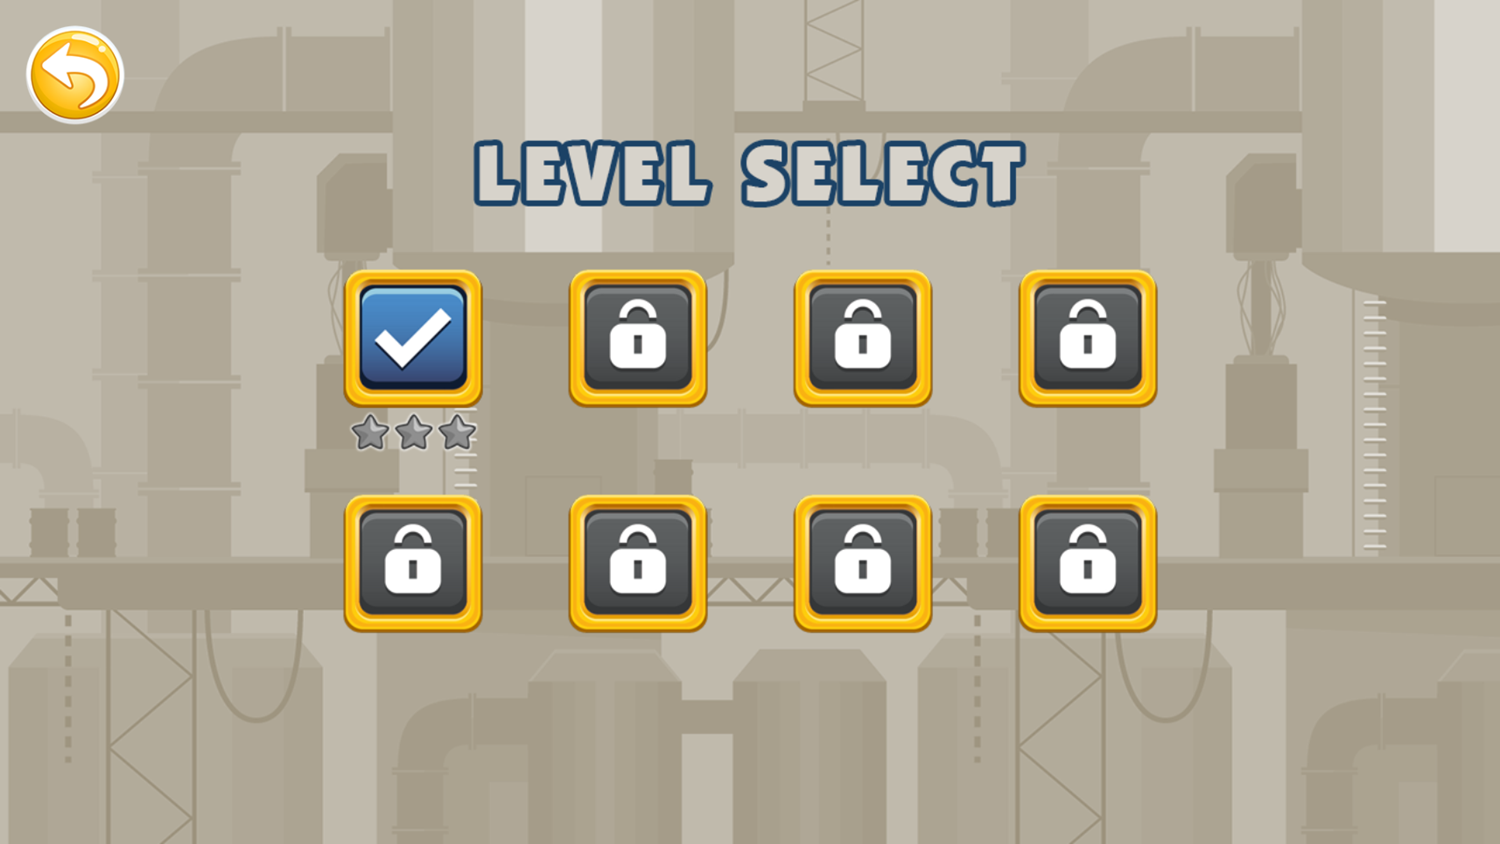 Battboy Adventure Game Level Select Screenshot.